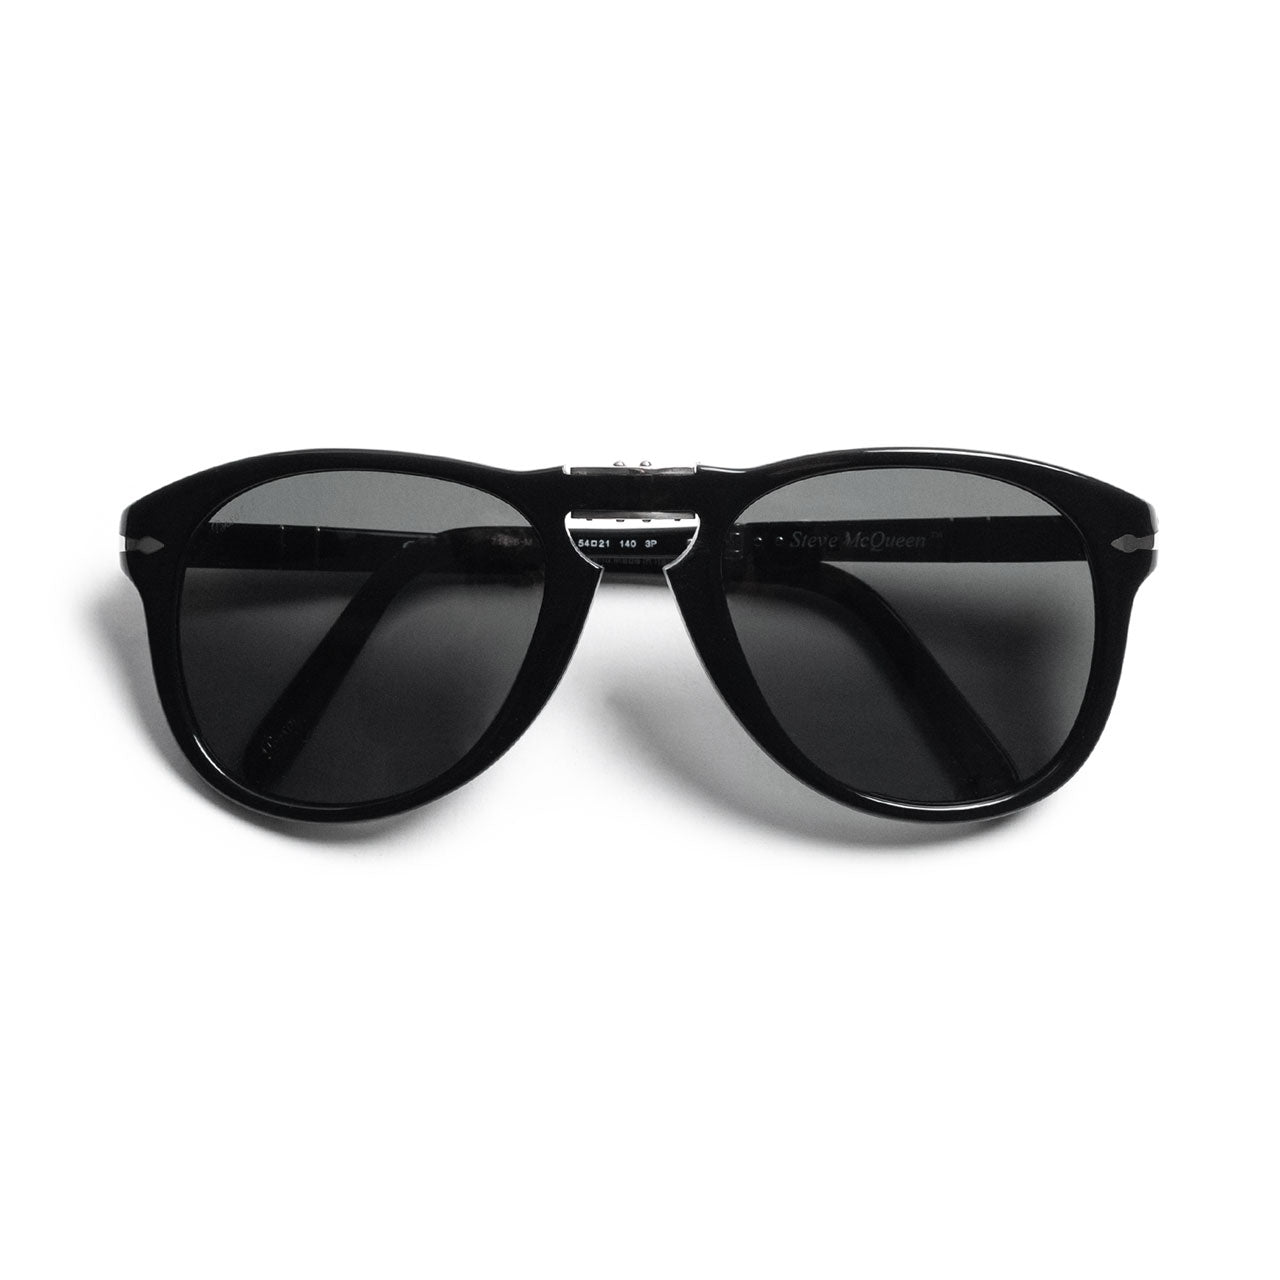 Persol 0649 95/31 - As Seen On Zac Efron & Jay Z Sunglasses - Pretavoir